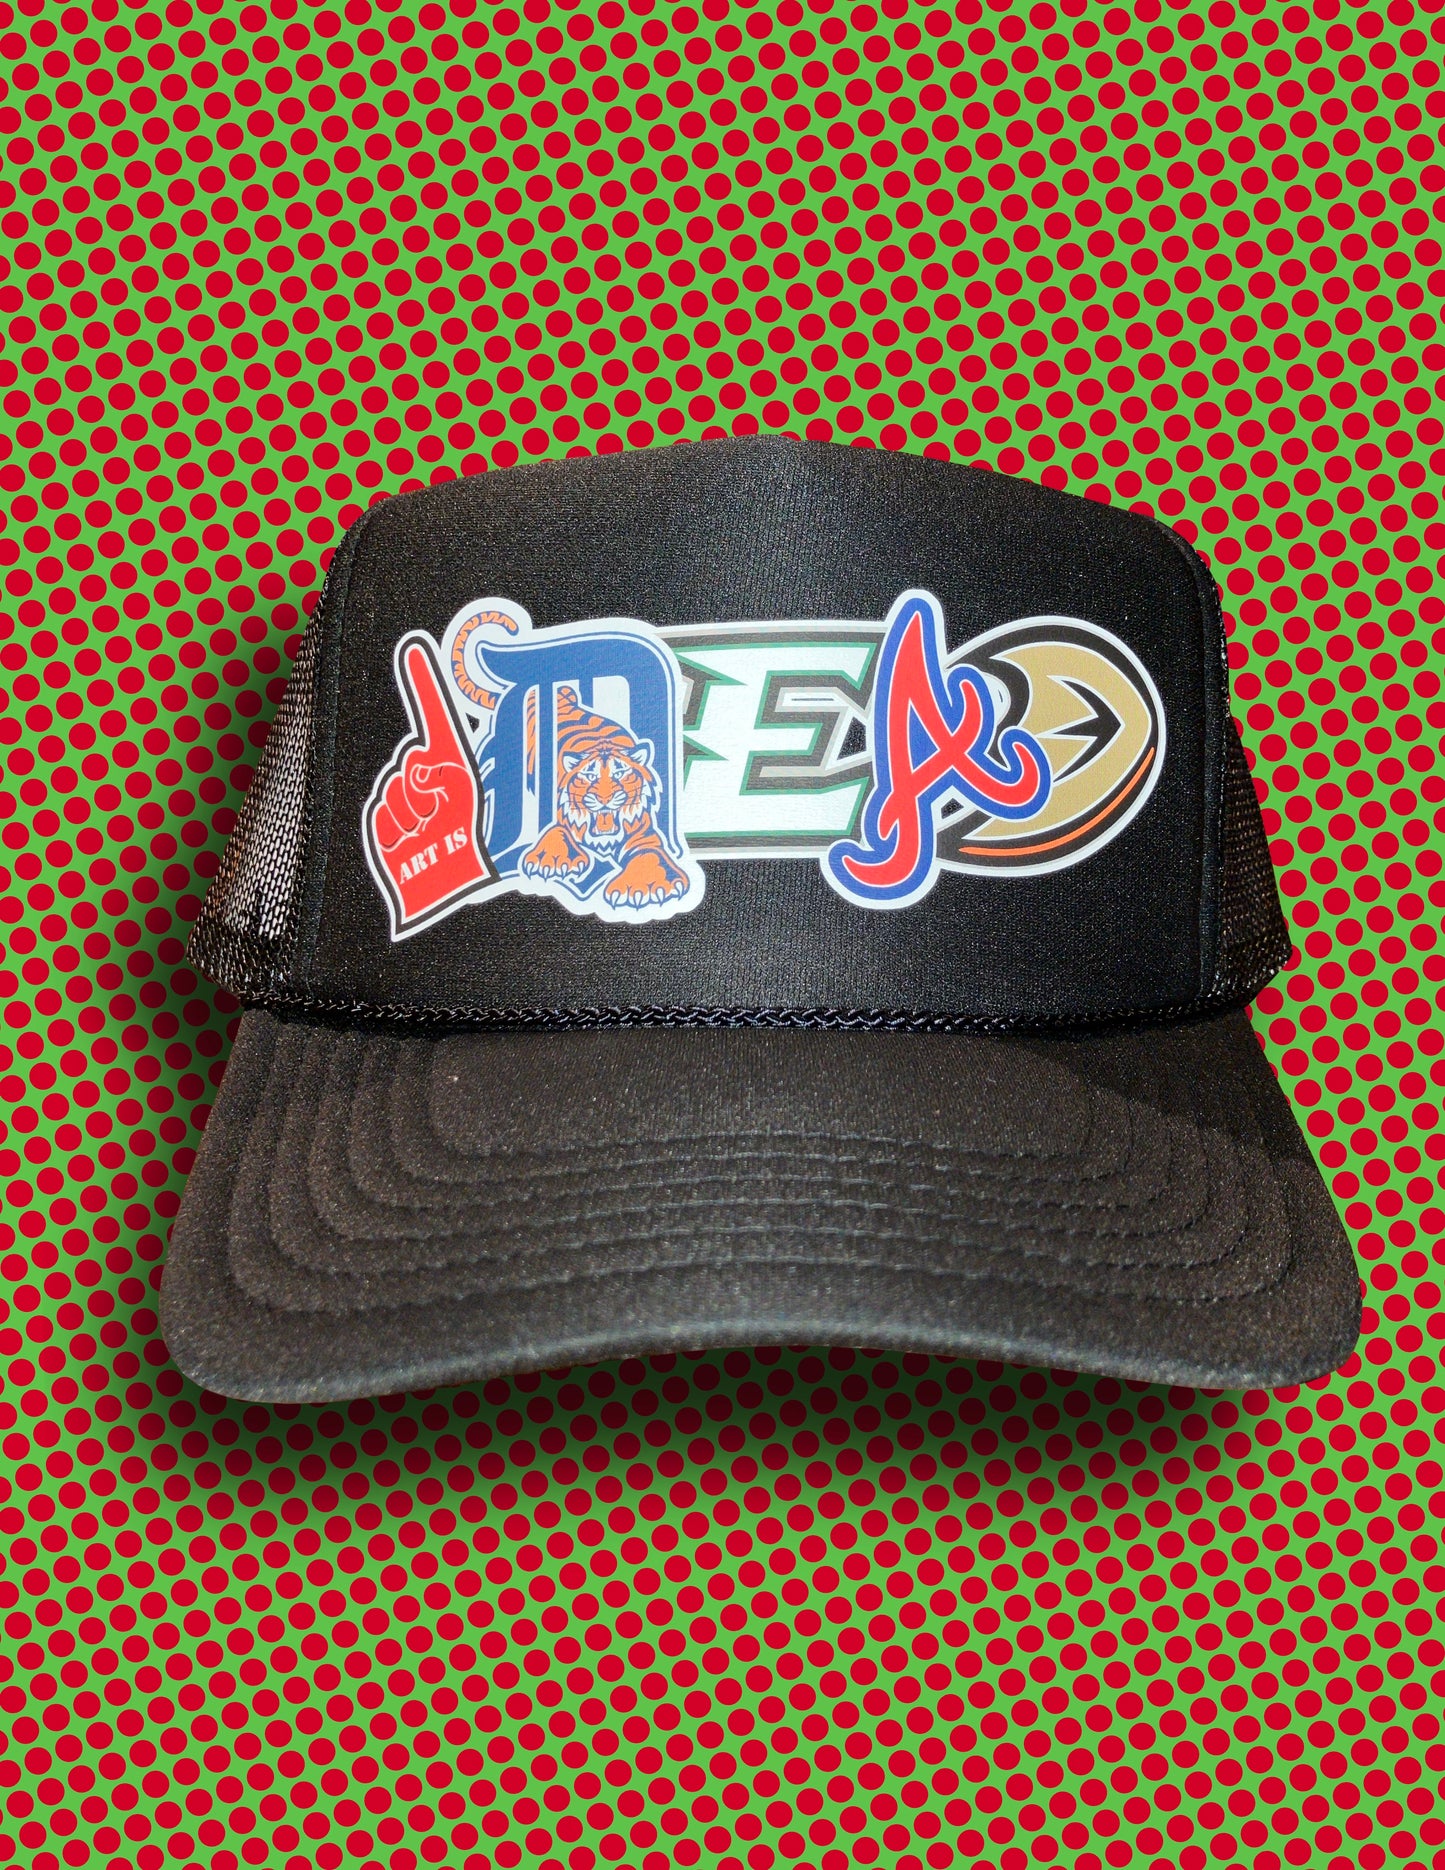 Sports Logo Hat Black